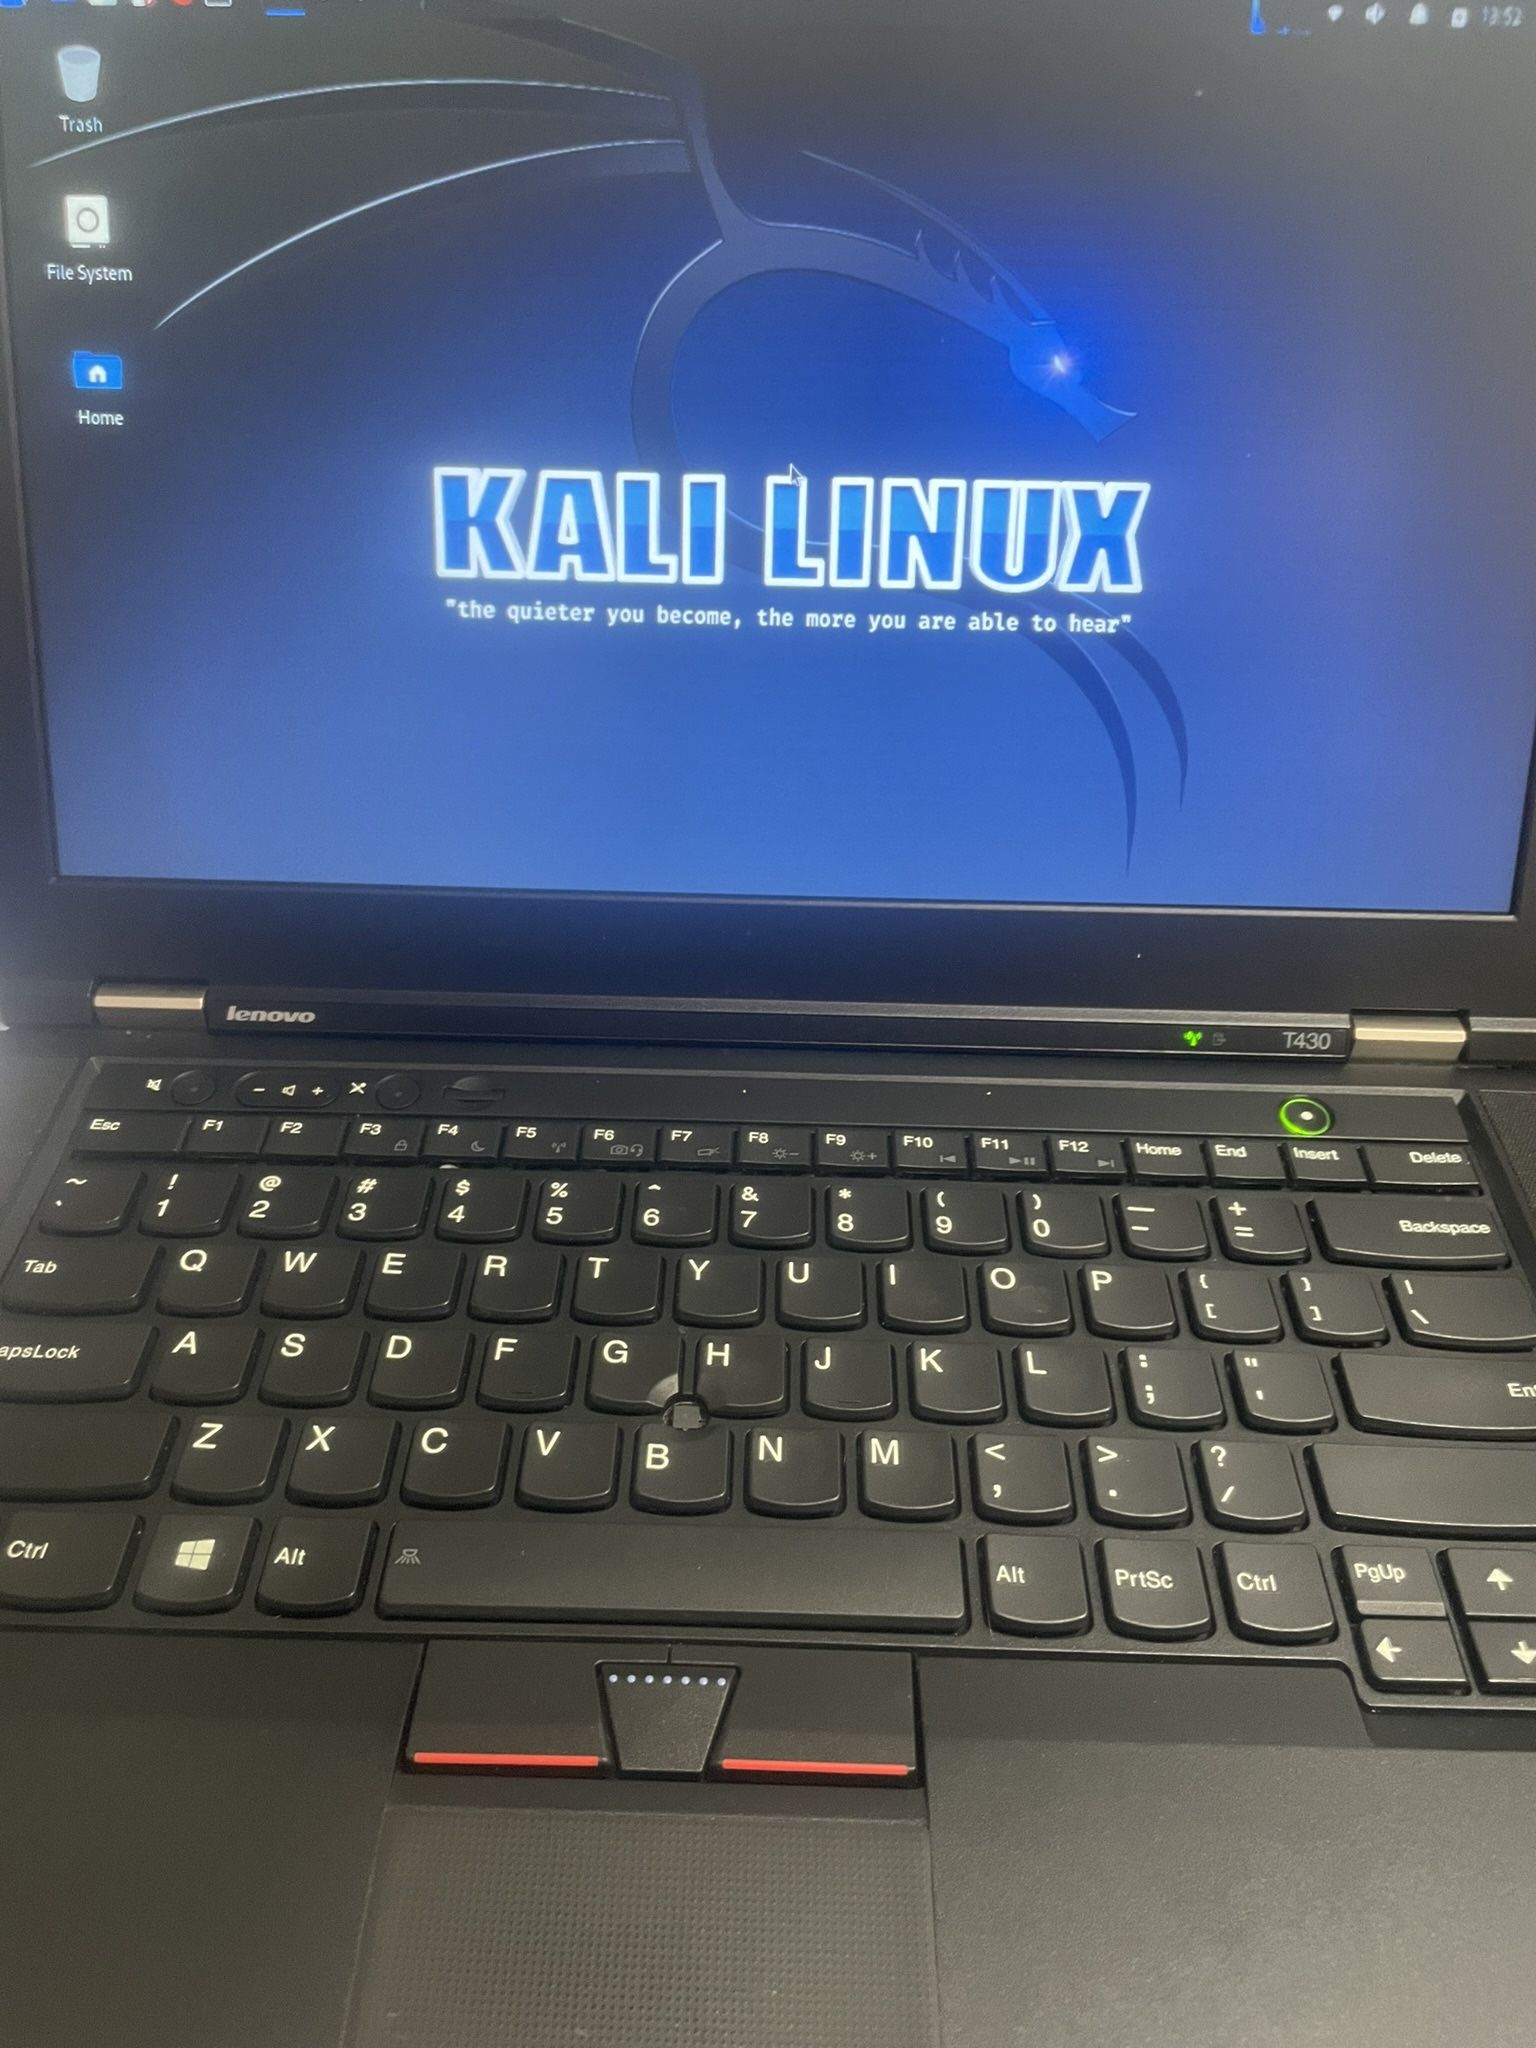 Professional Cybersecurity Kali Linux Laptop - Intel Core i5,128GB SSD, HD Graphics 4000